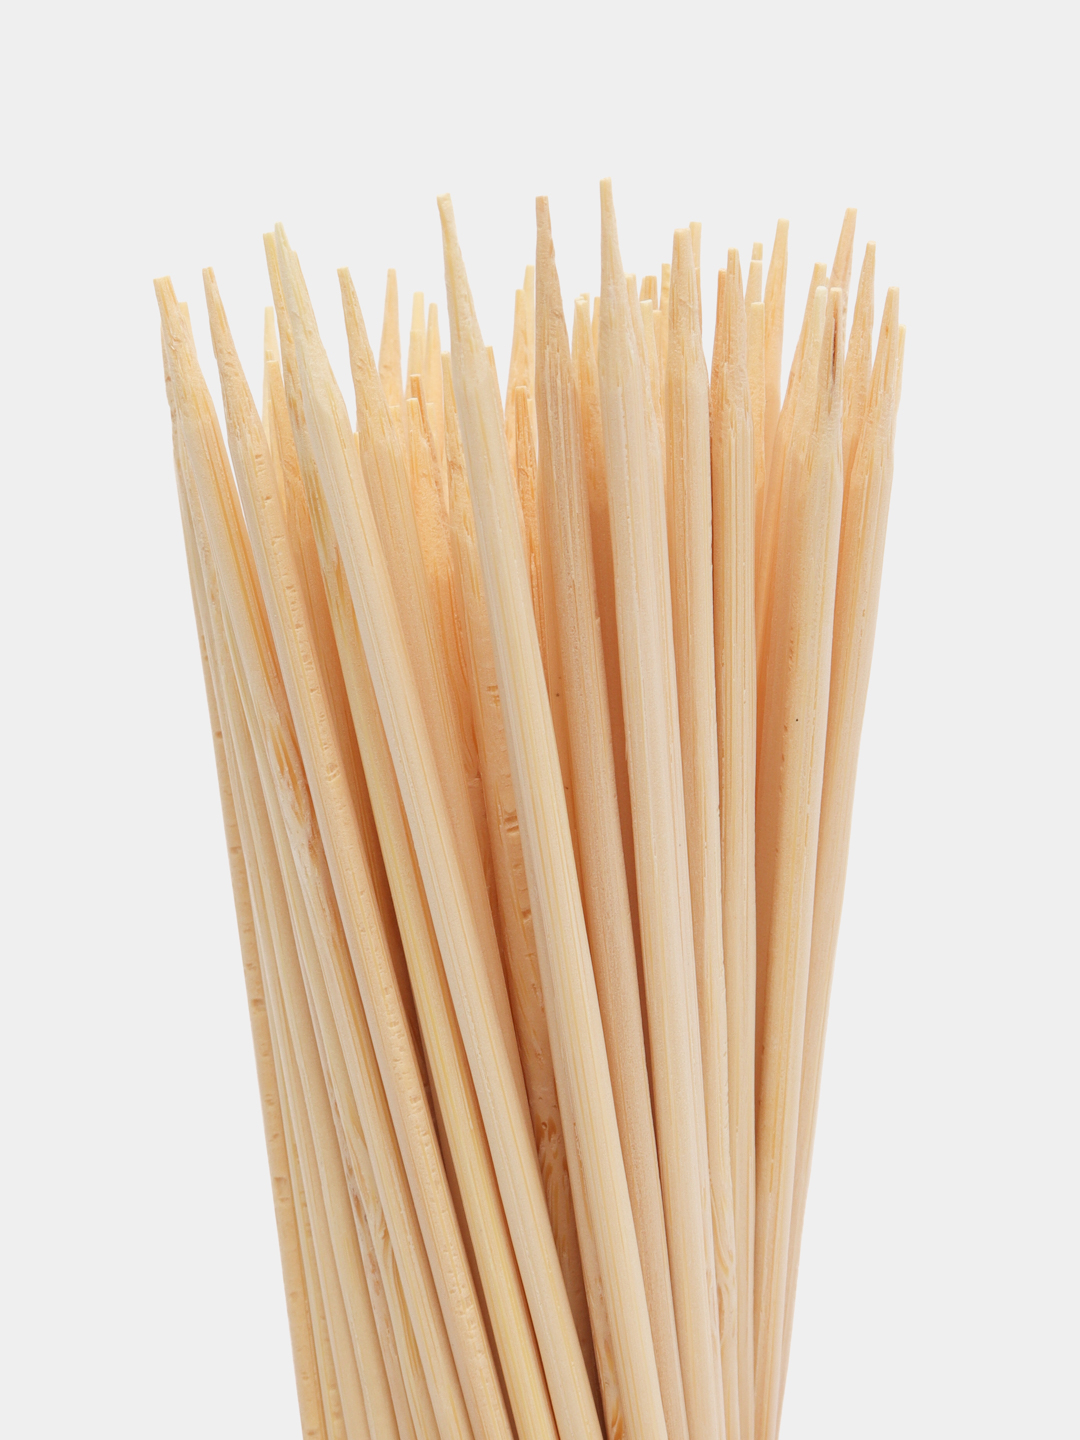 Шпажки-шампуры деревянные, бамбук, диаметр 3 мм, 90 штук за 59 ₽  .